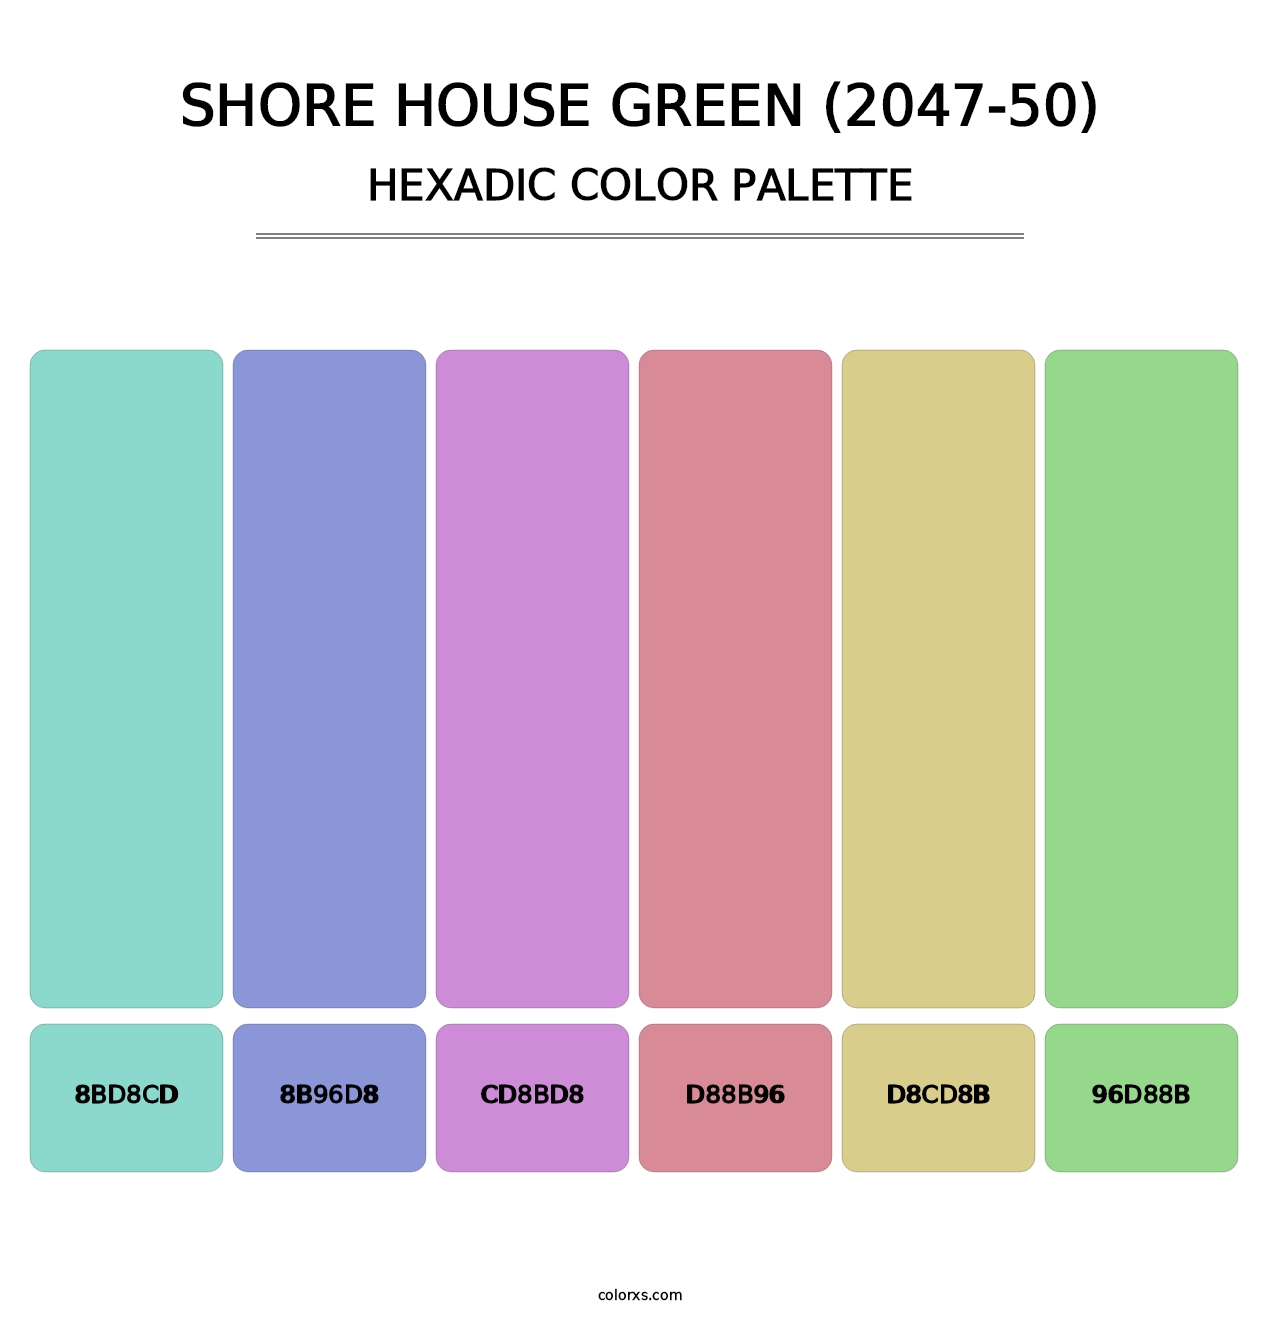 Shore House Green (2047-50) - Hexadic Color Palette